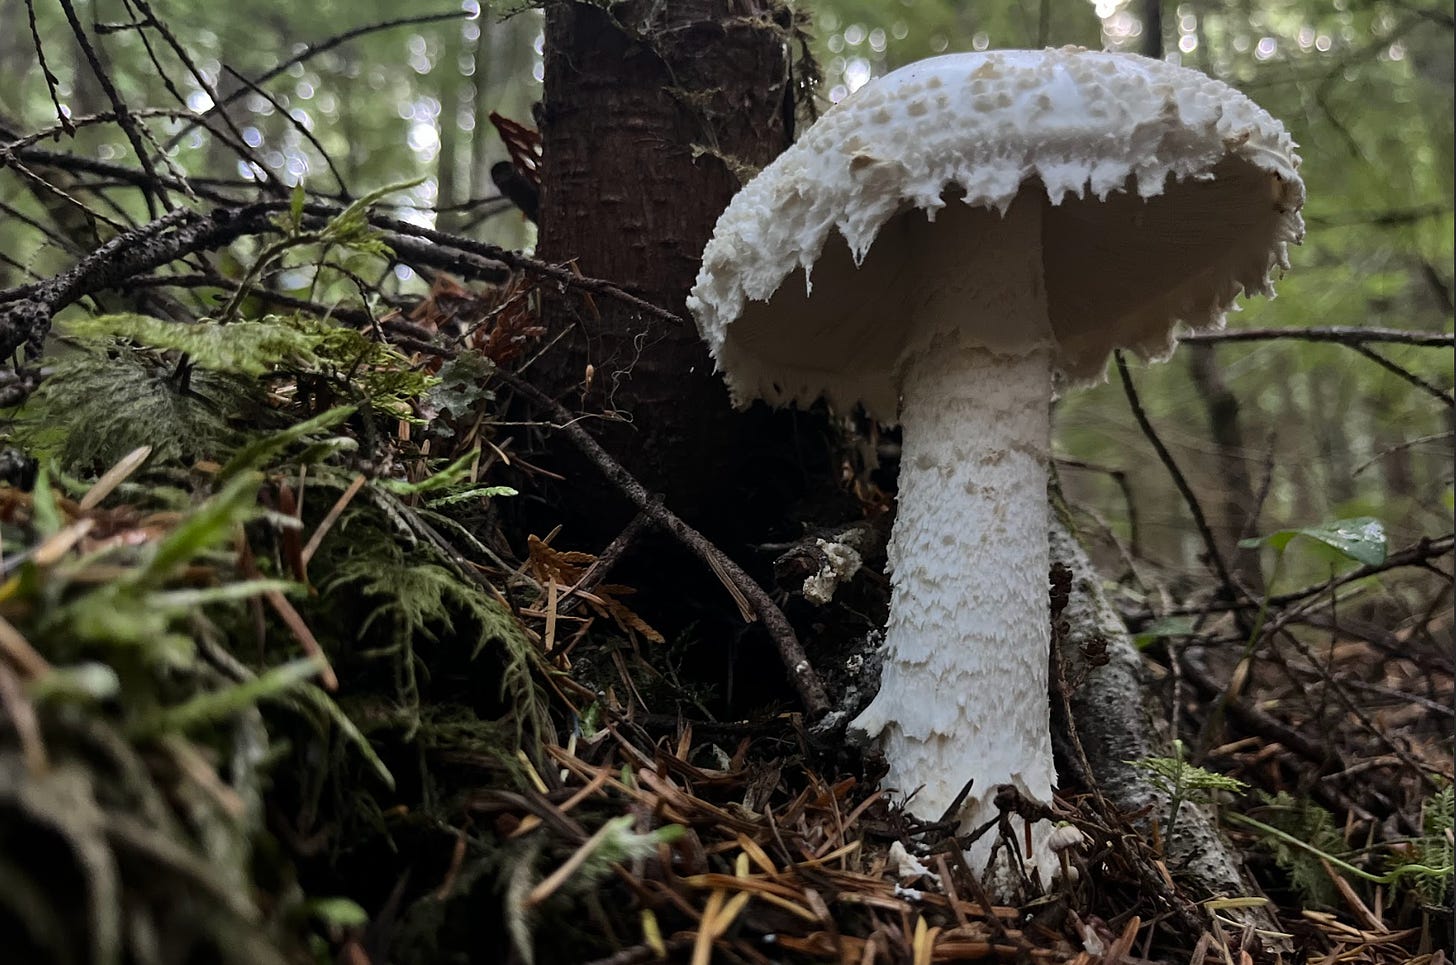 White shaggy mushroom on forest floor